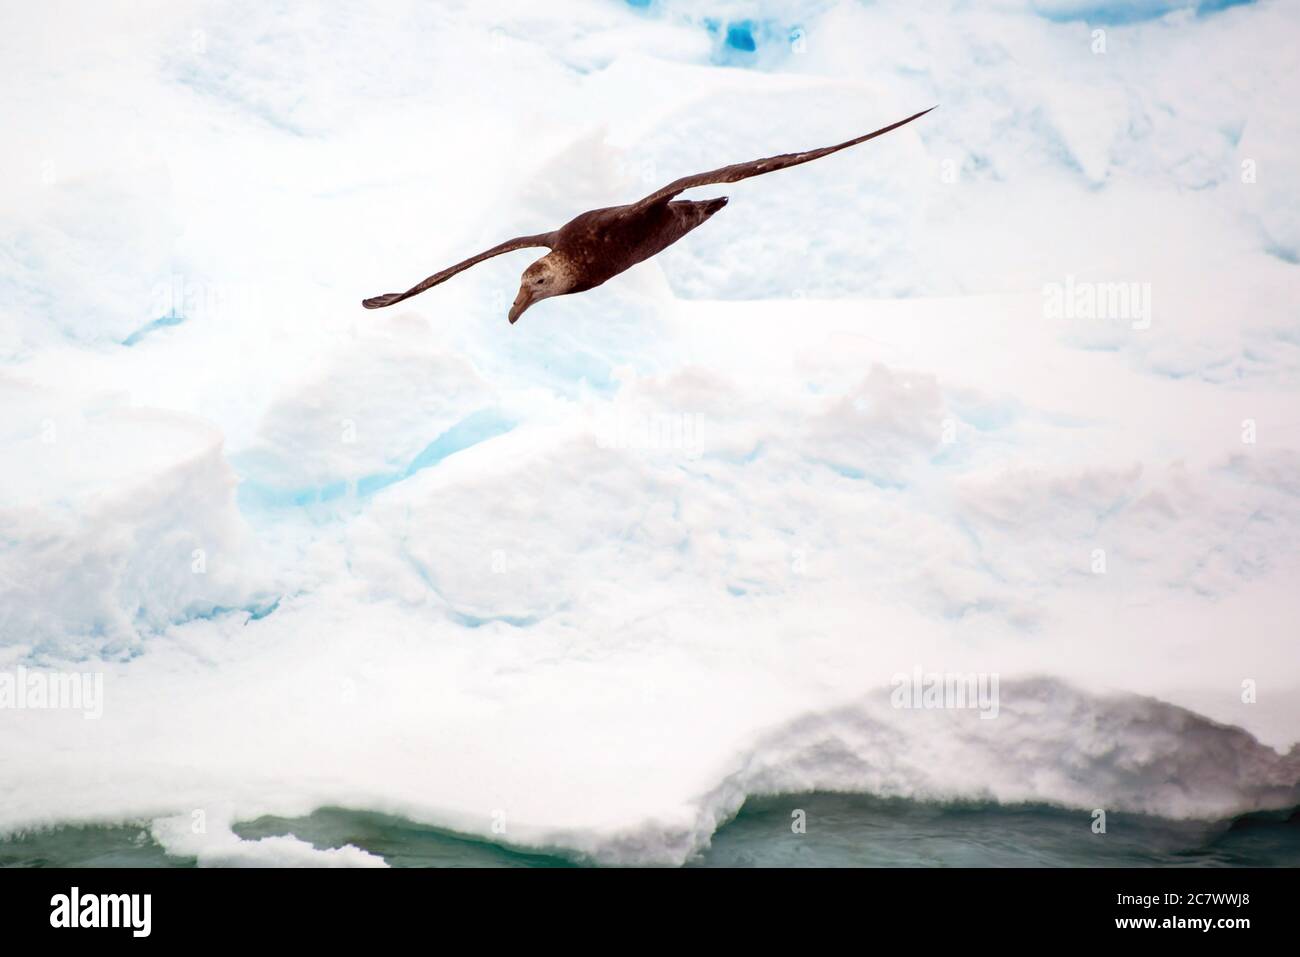 South polar skua (Stercorarius maccormicki). Giornata di sole. Close-up. Foto Stock